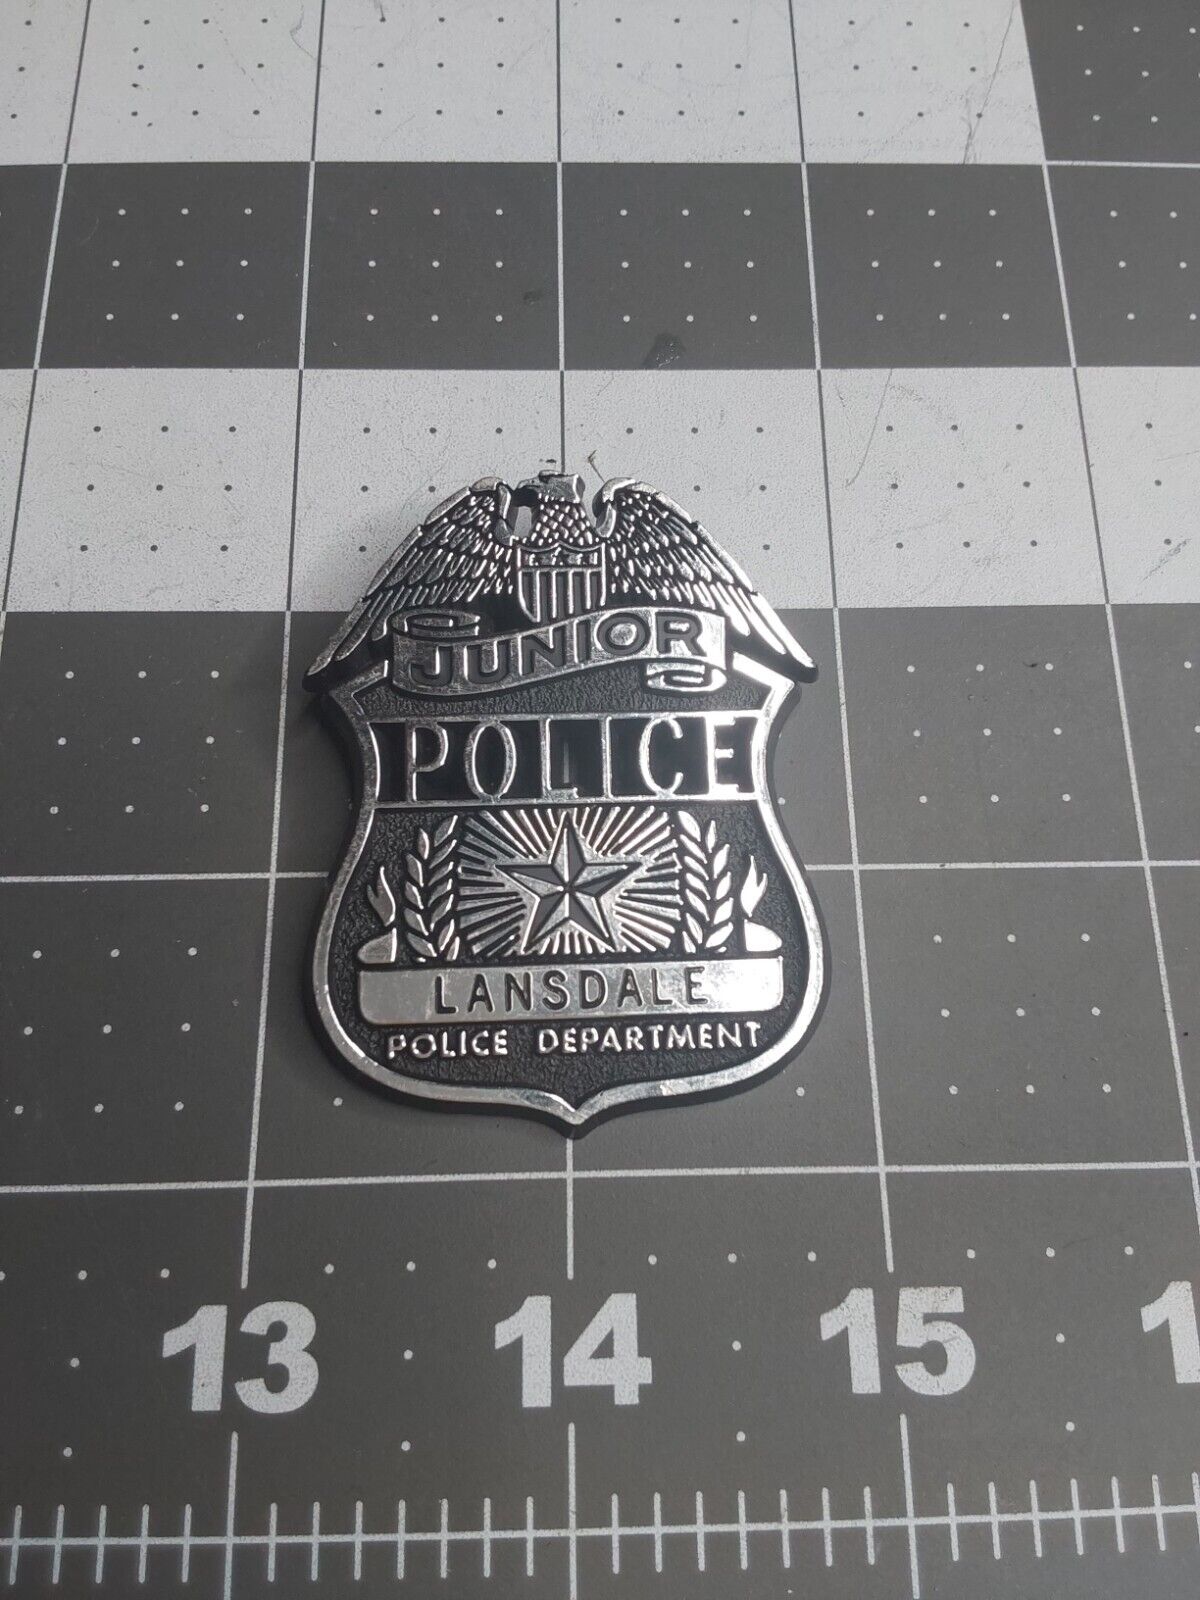 n Junior Police Lansdale PA Plastic Pin